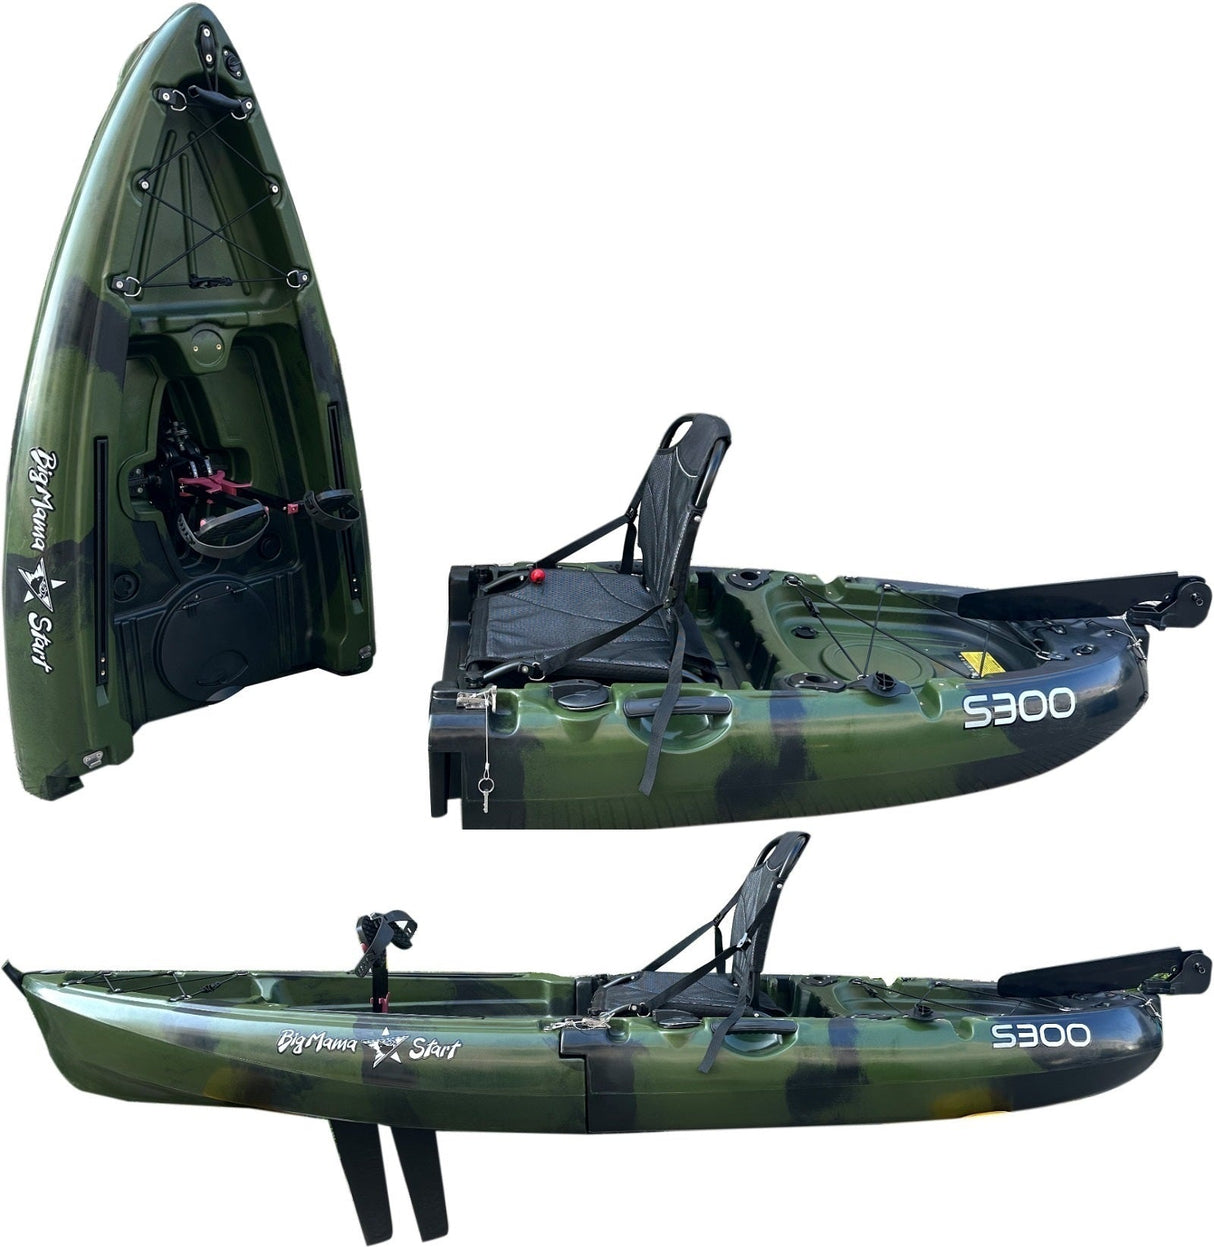 Kayak divisibile a pedali con pinne BIG MAMA START S300 colore blu - TIMESPORT24